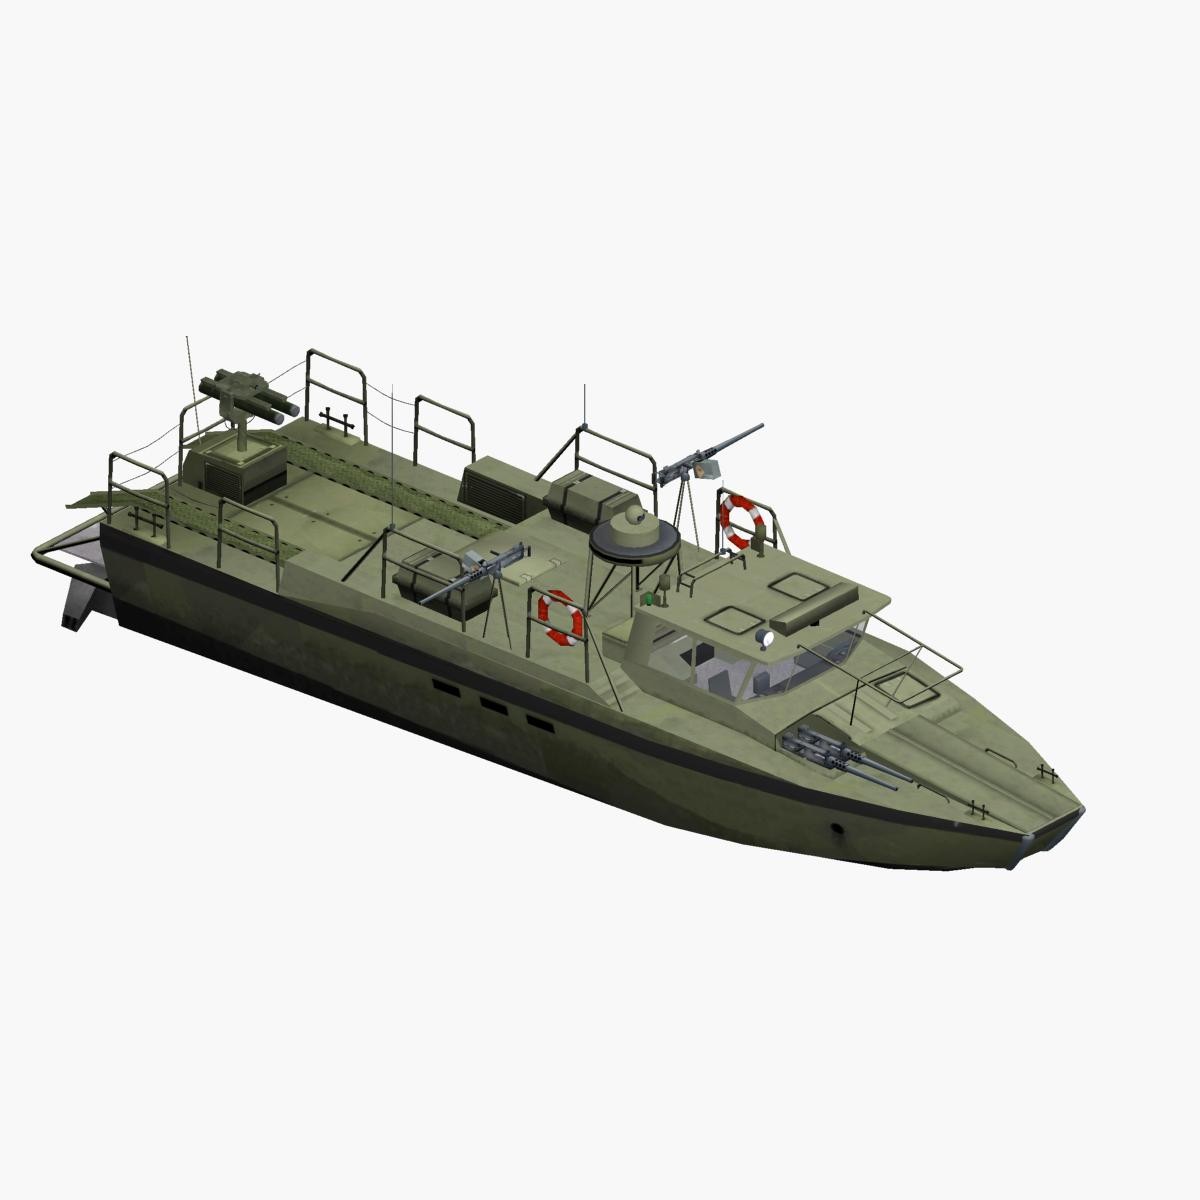 Combat Boat 90 Backgrounds, Compatible - PC, Mobile, Gadgets| 1200x1200 px